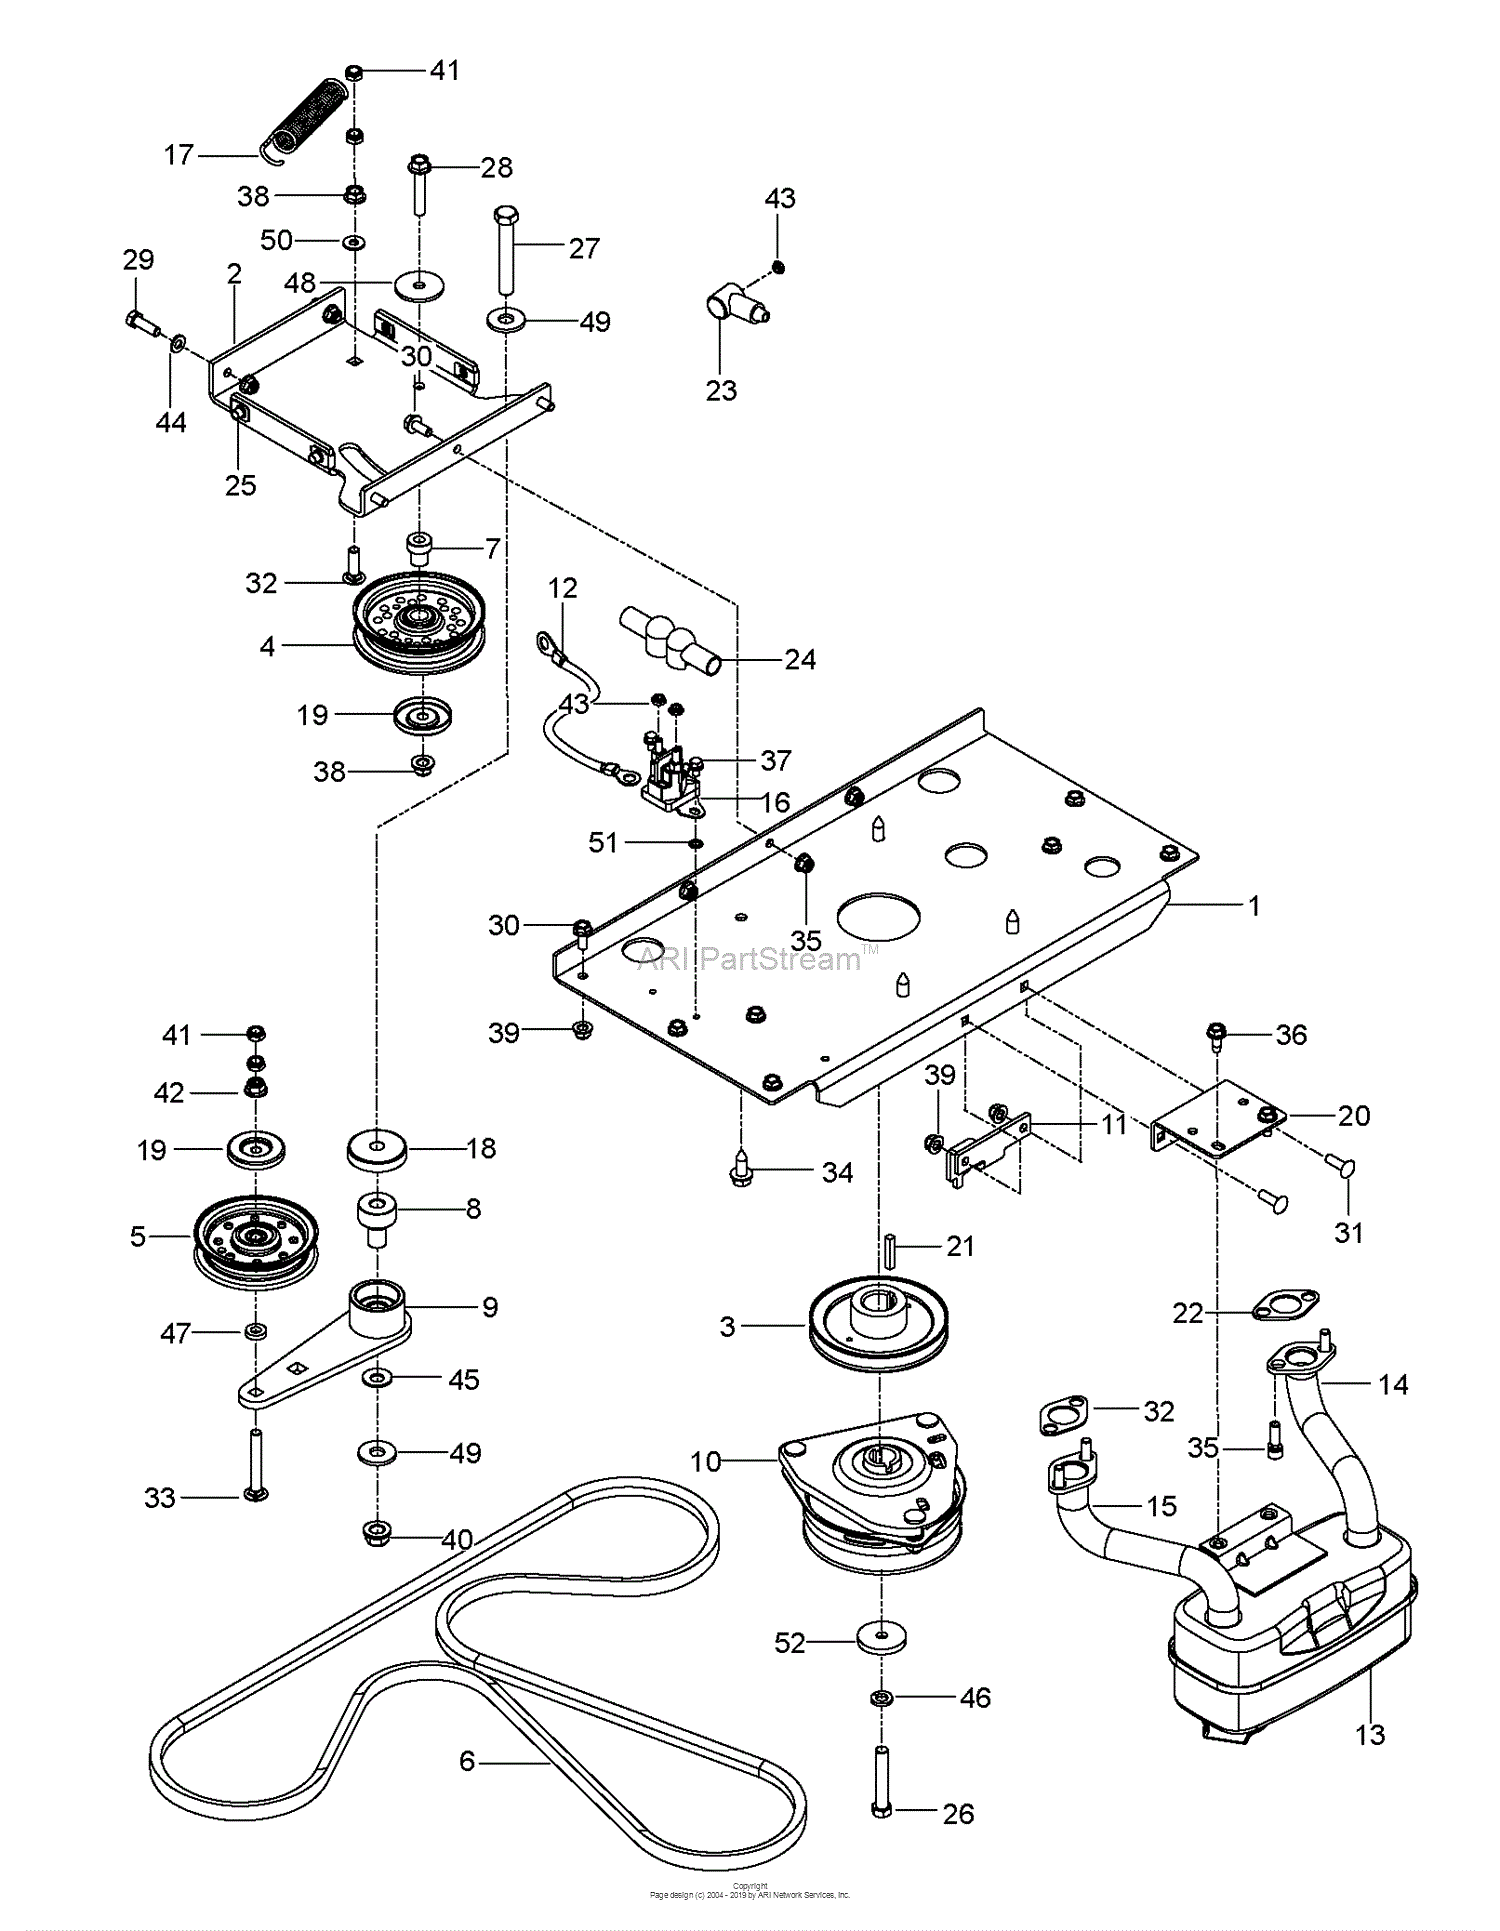 Mz 54 Parts Diagram